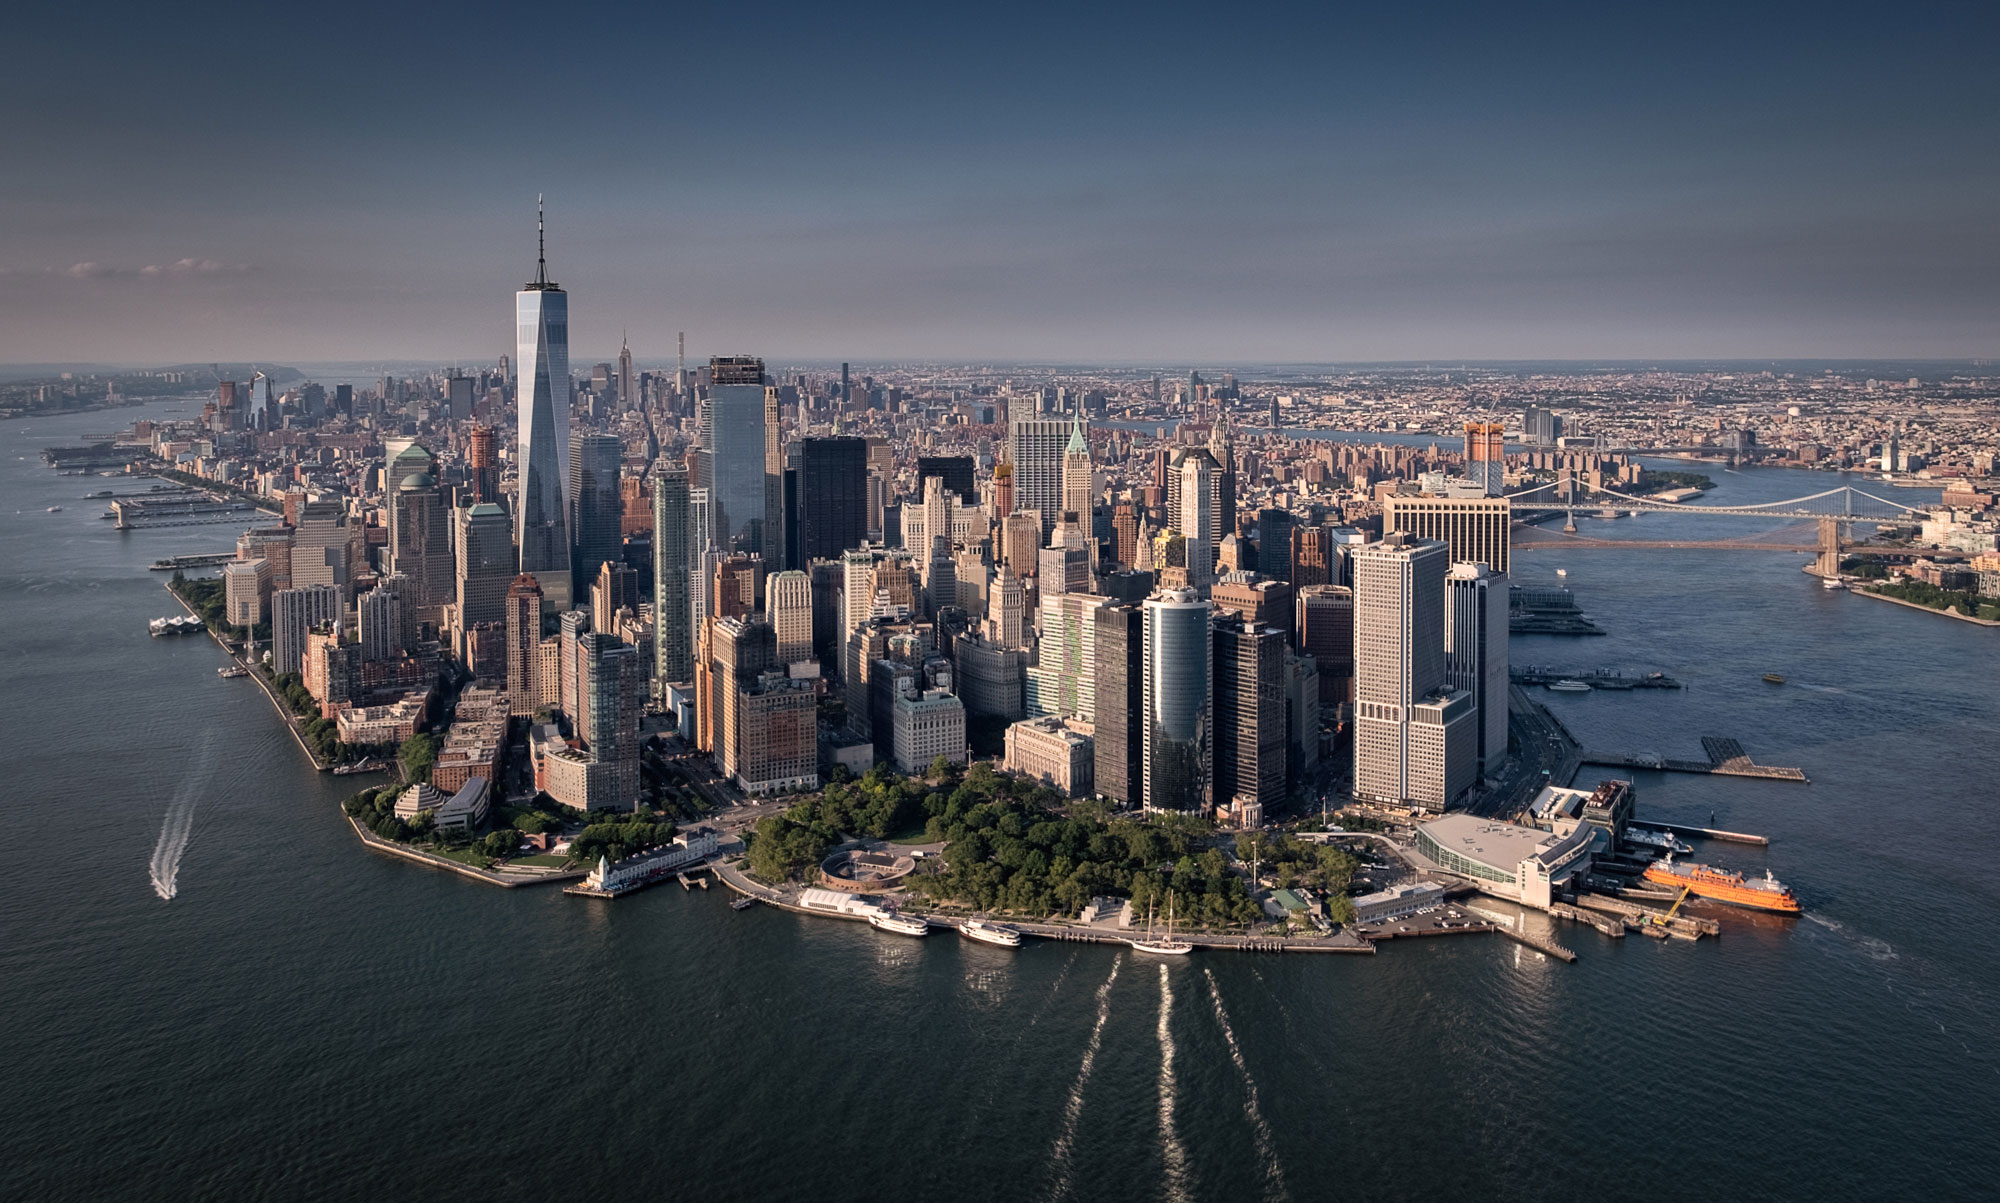 Flying with Fujifilm – New York City